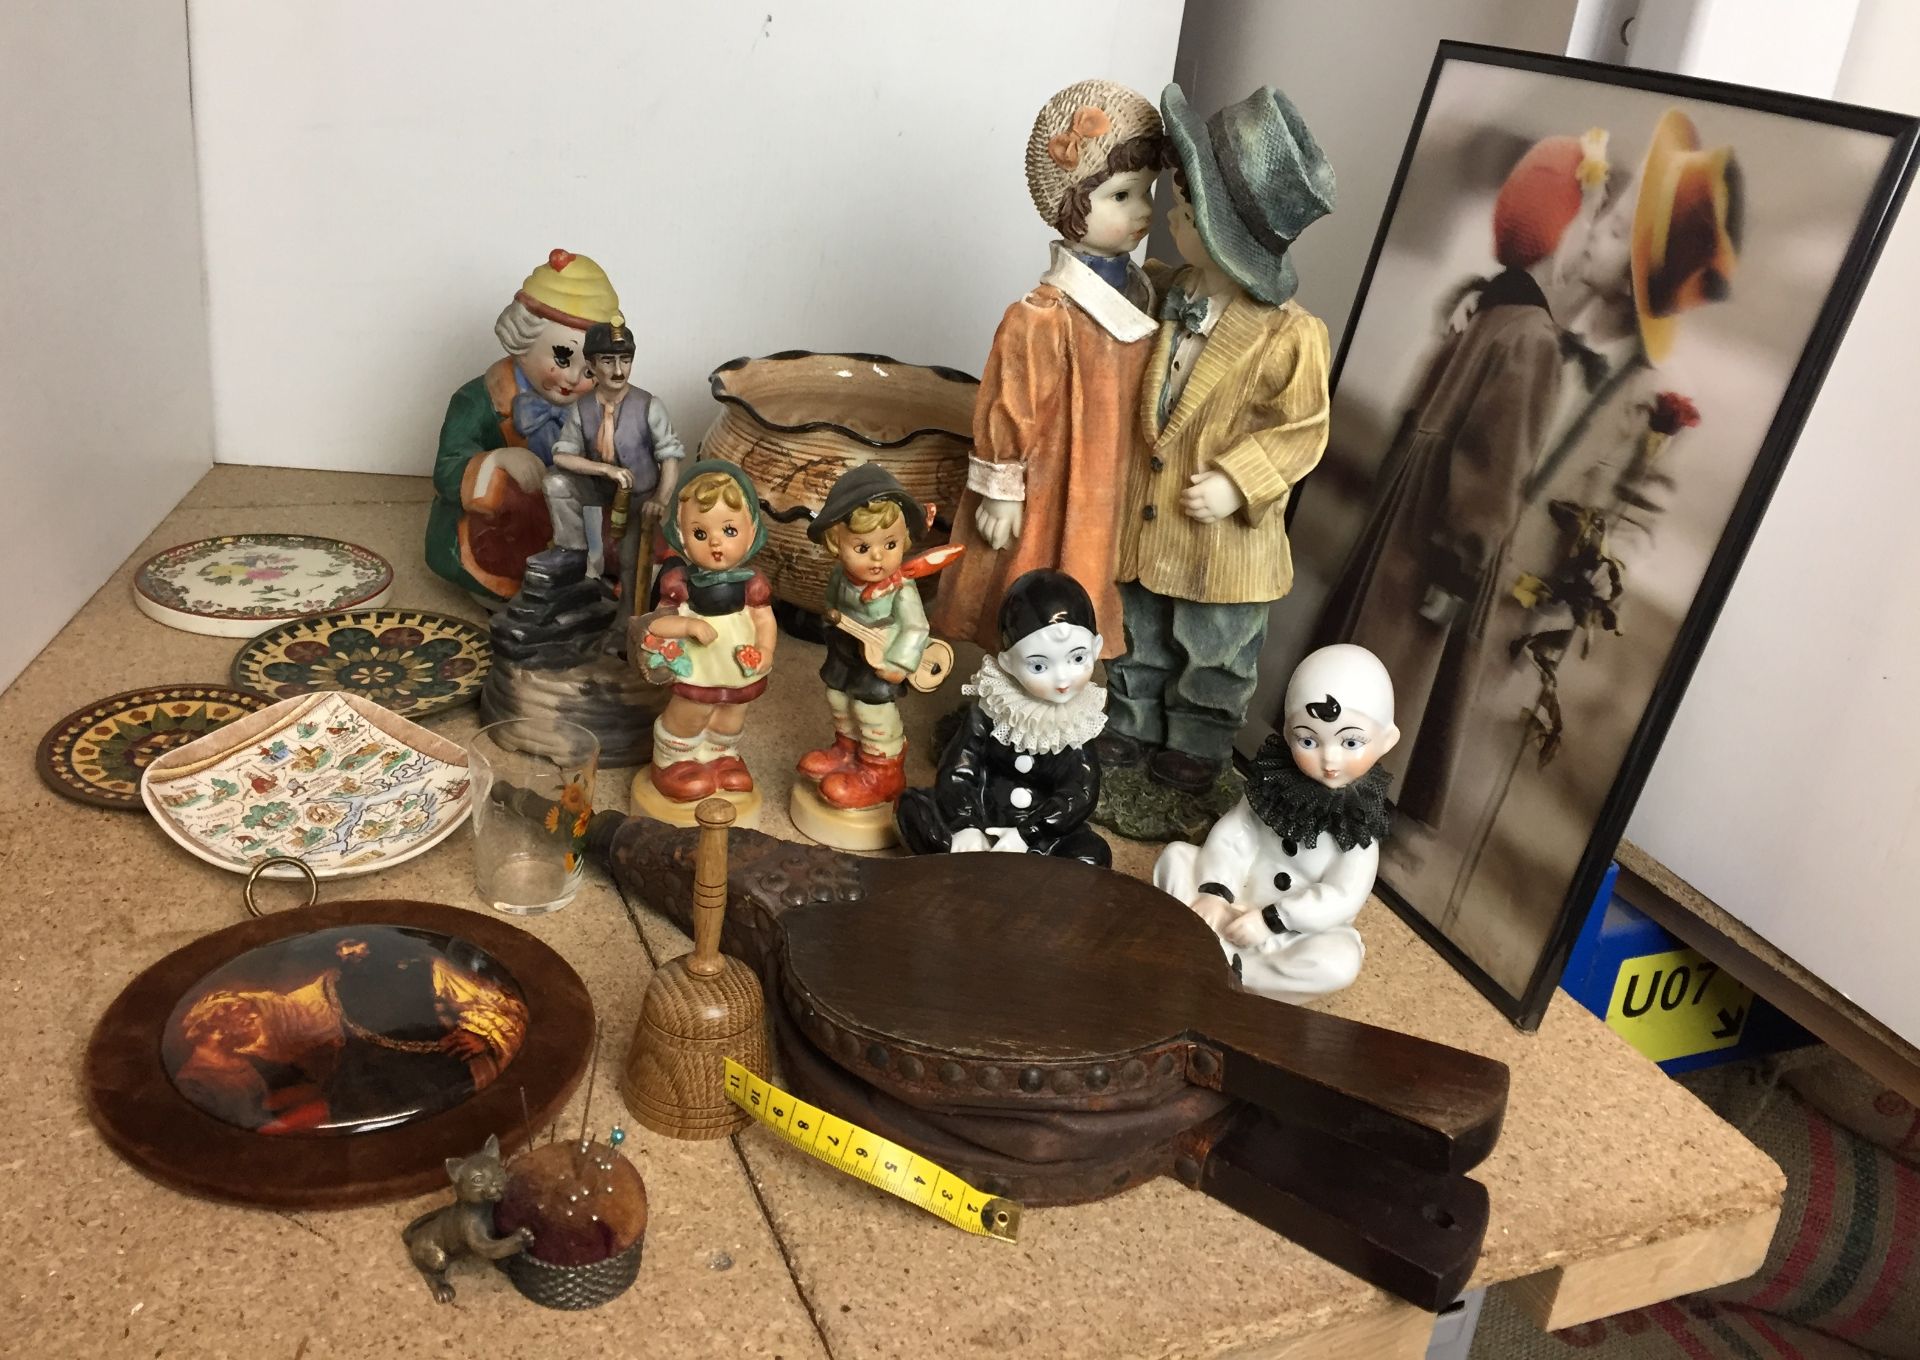 Eighteen items including seven figurines, wooden bellows,